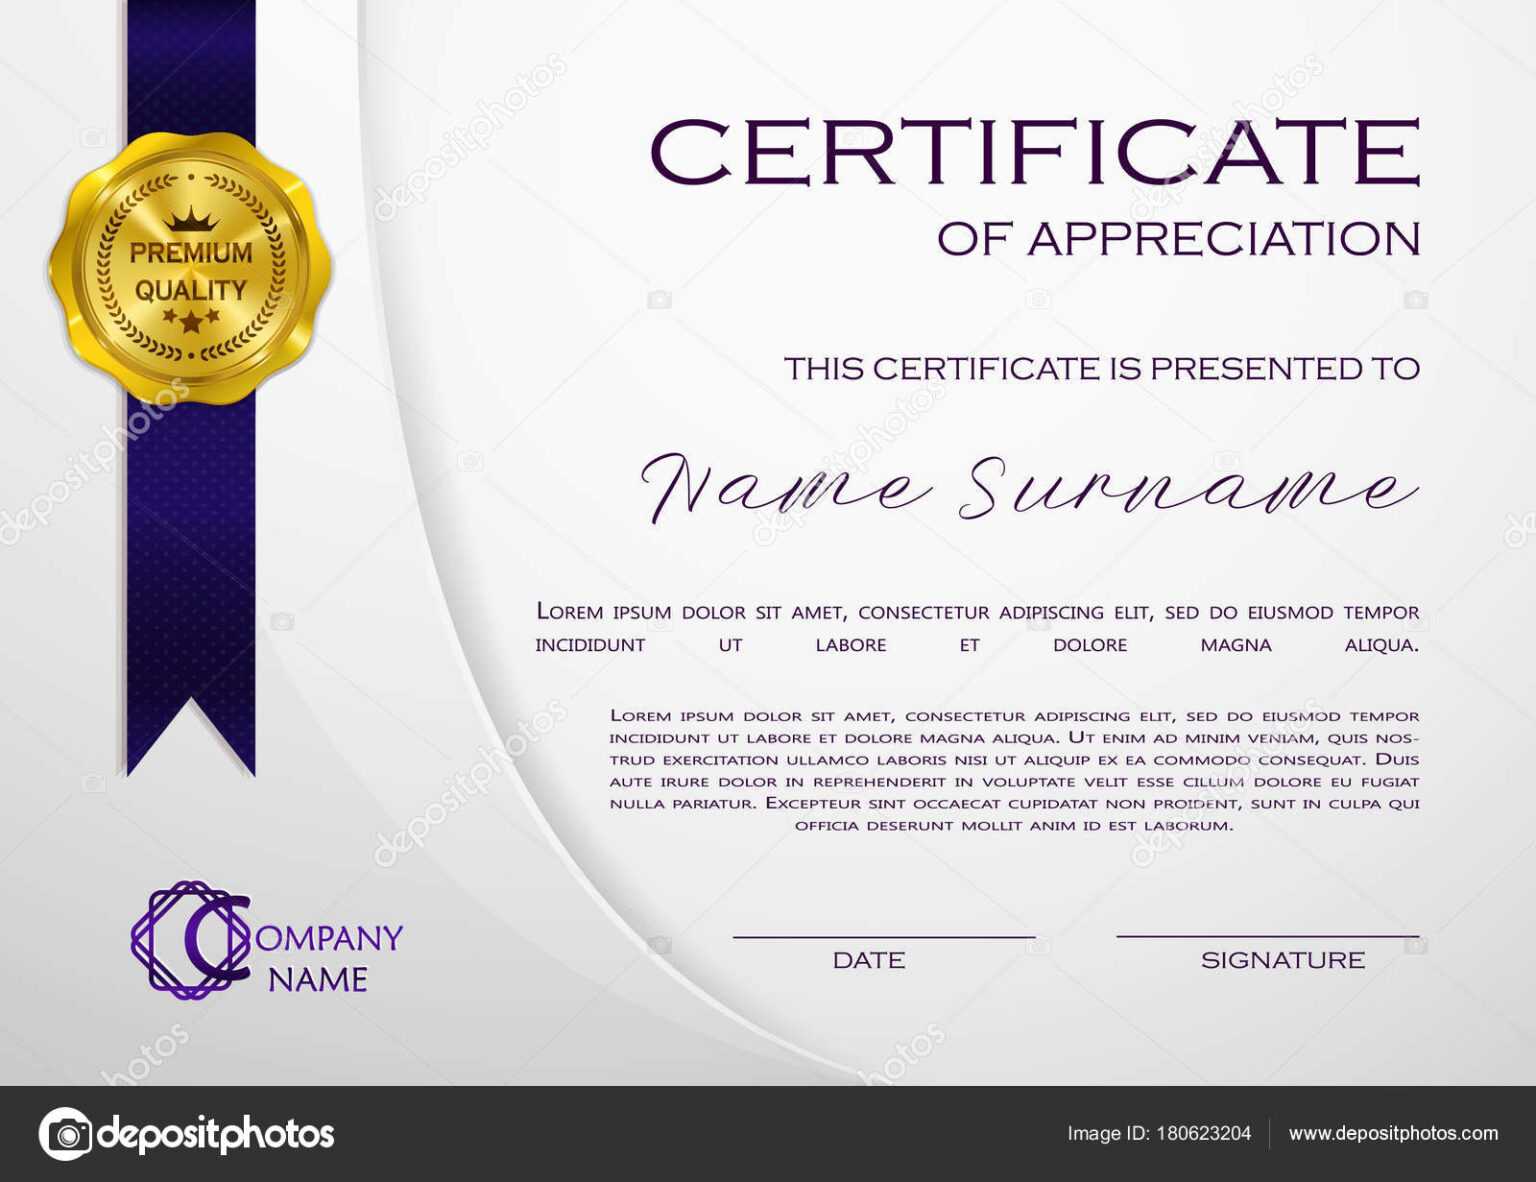 Qualification Certificate Appreciation Design Elegant Luxury intended